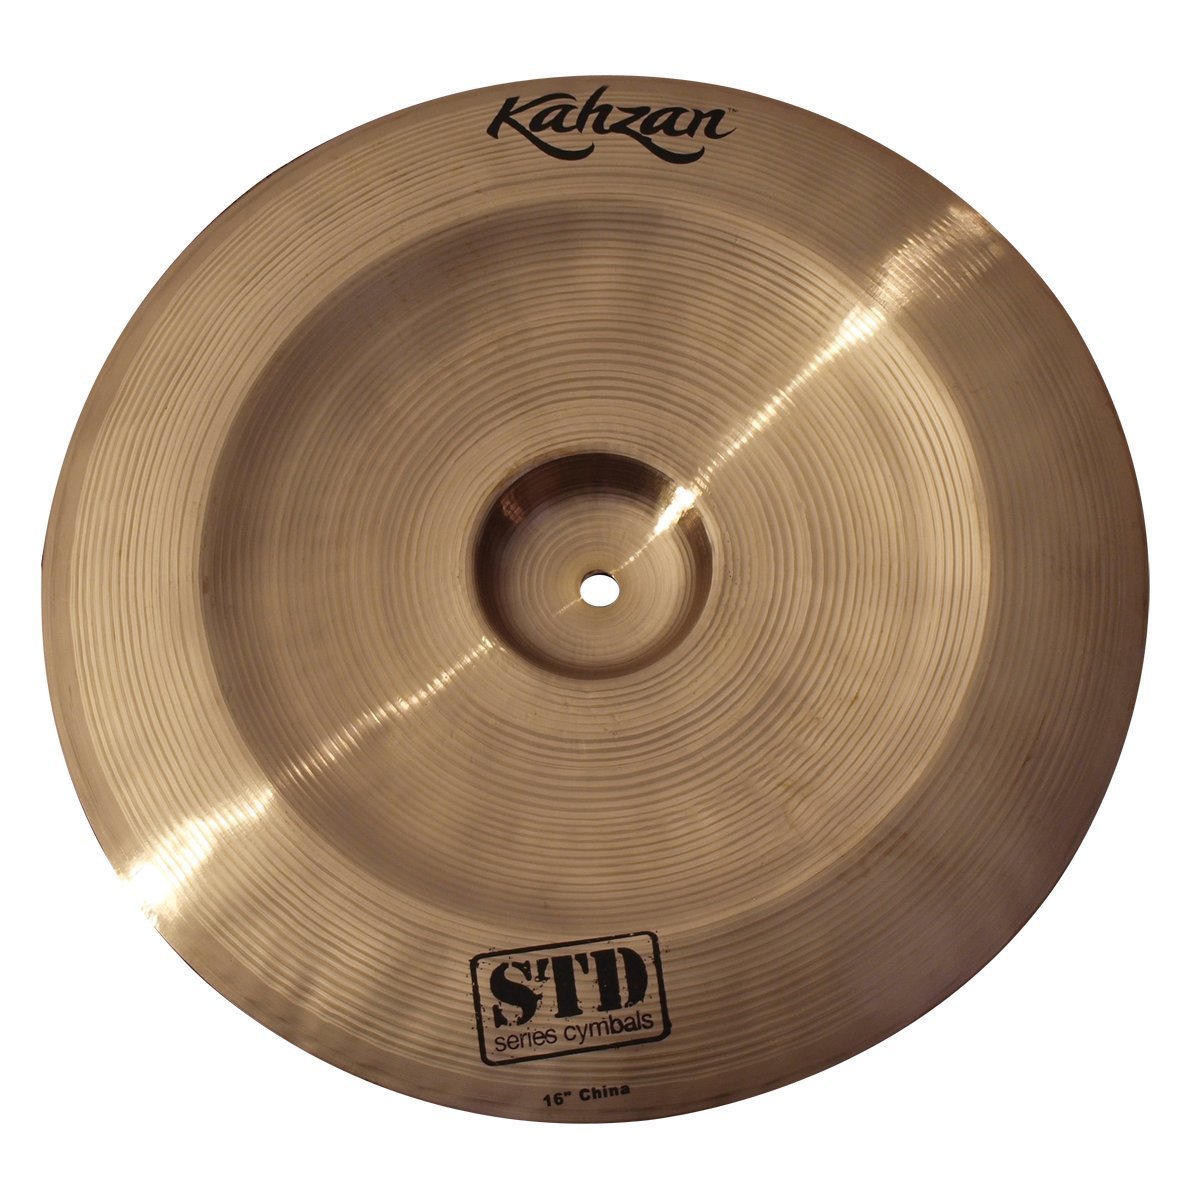 Kahzan 'STD Series' China Cymbal (16")-KC-STD-CH16